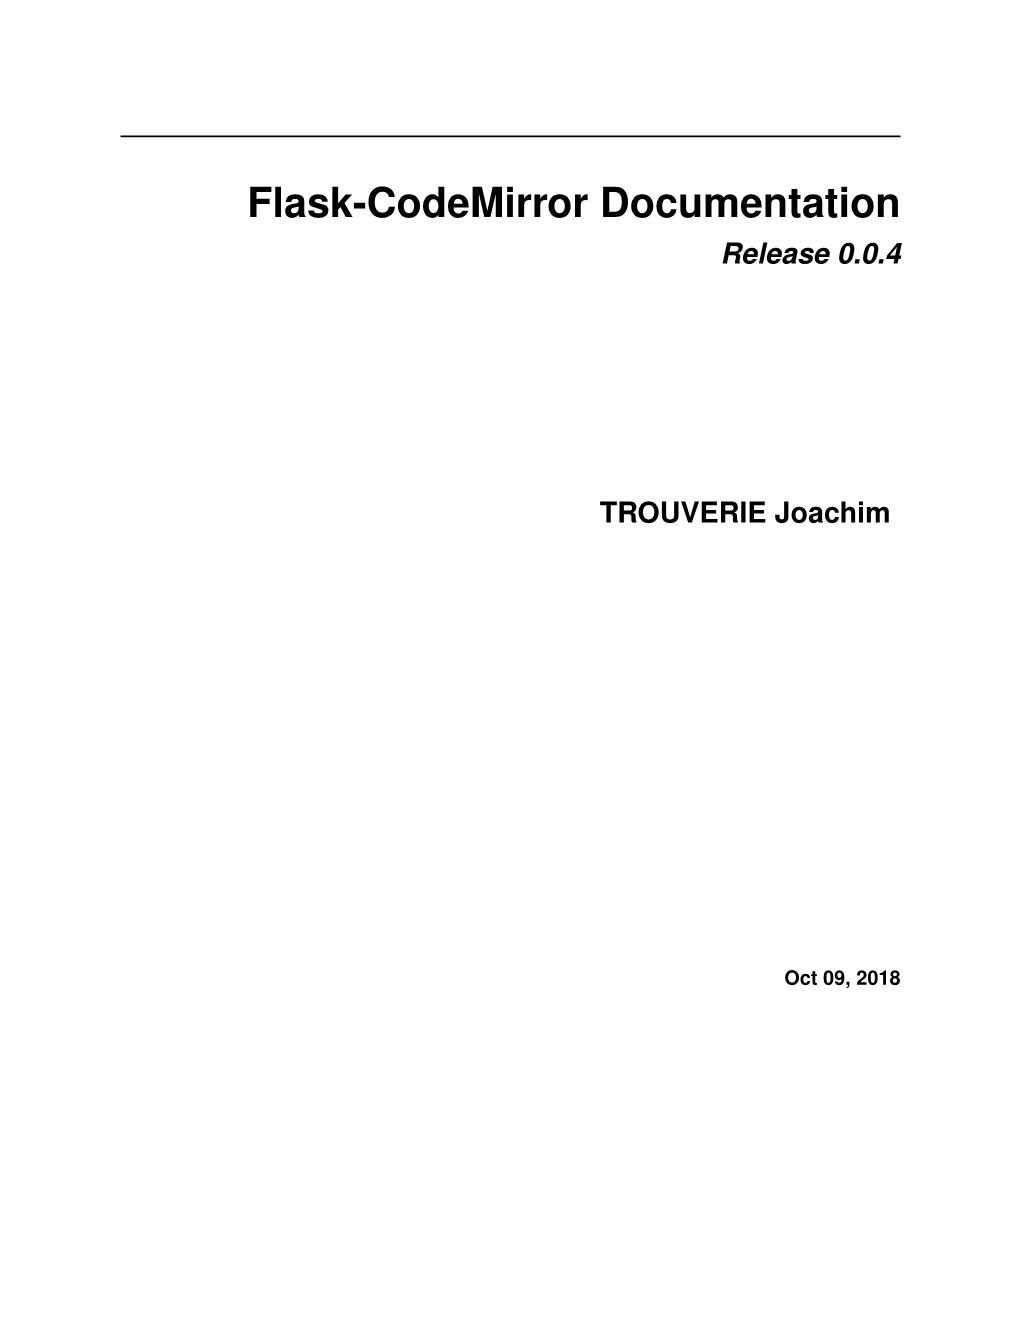 Flask-Codemirror Documentation Release 0.0.4